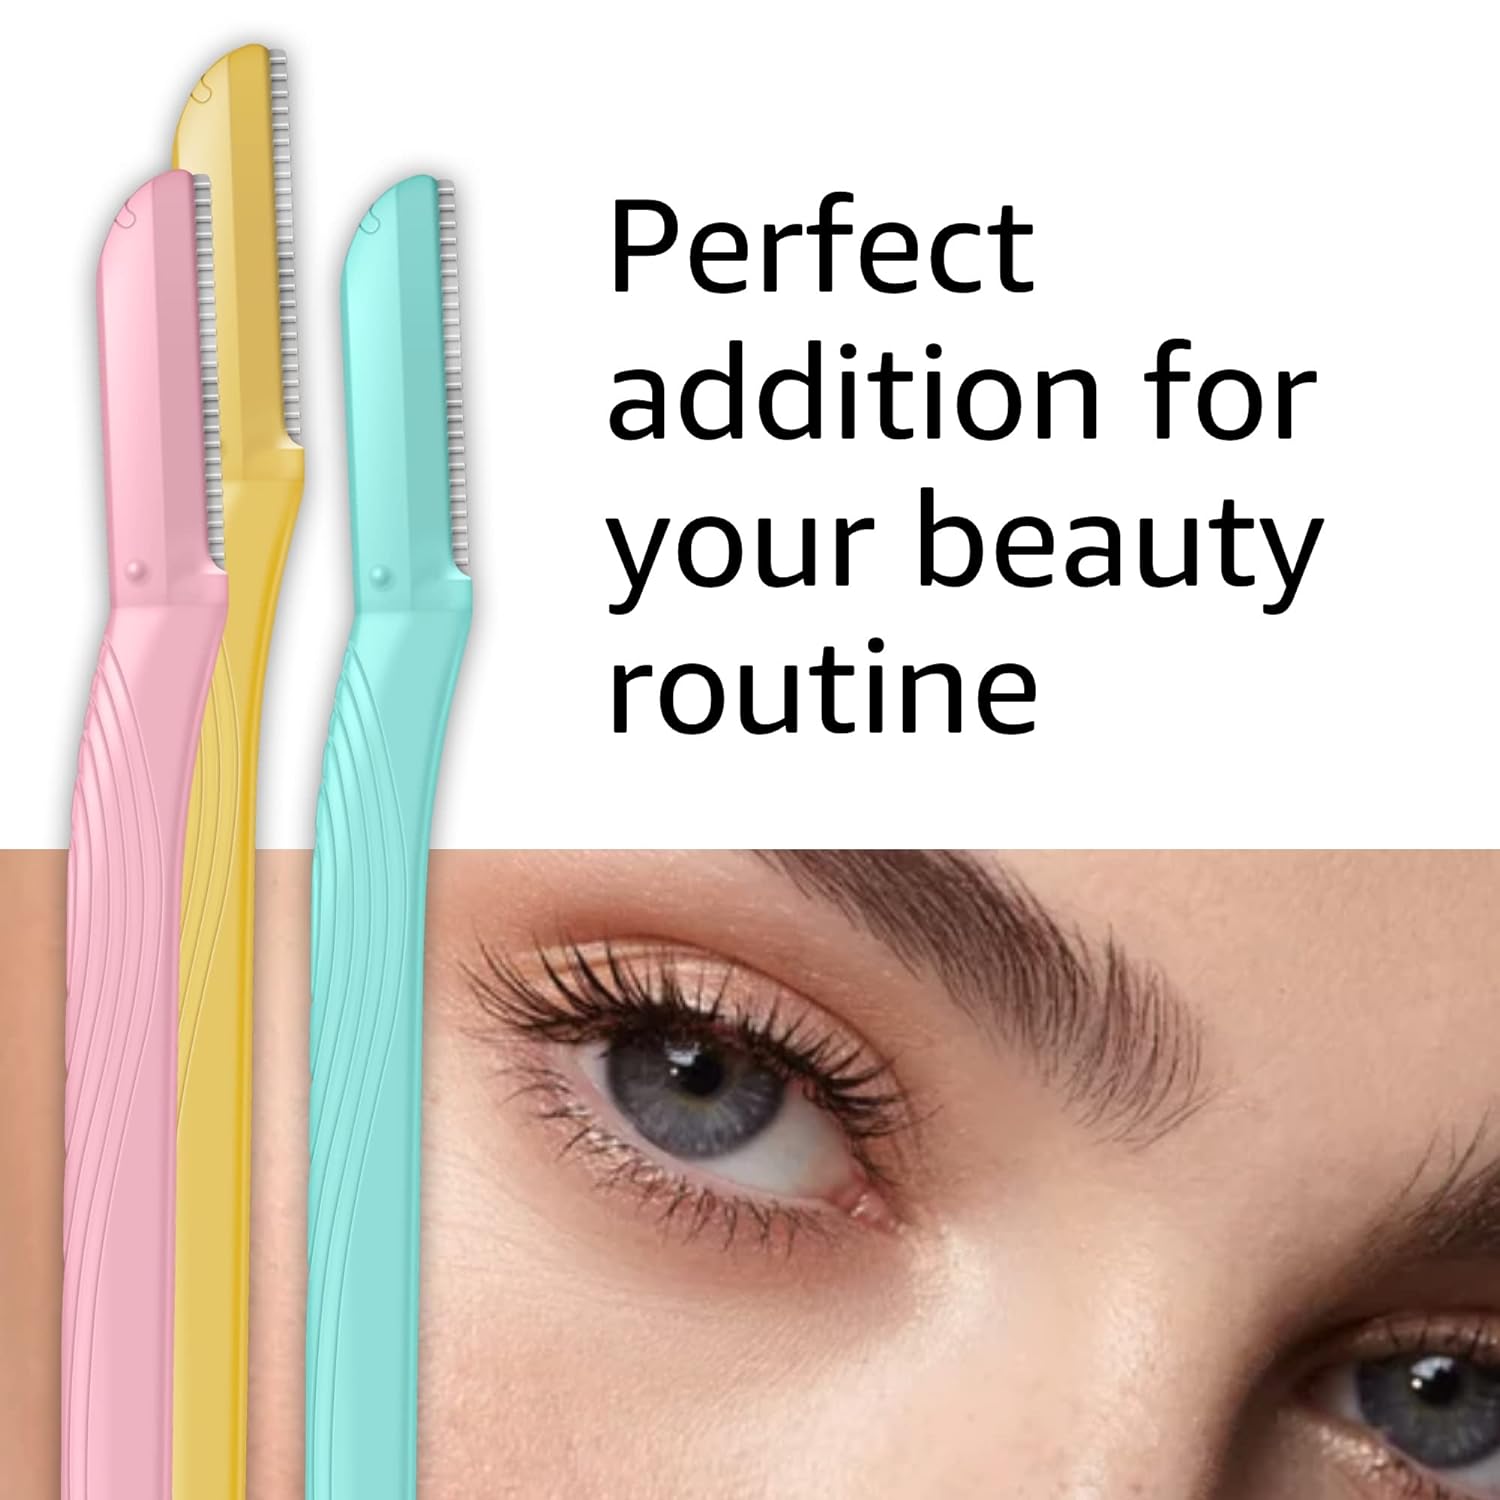 Amazon Basics Womens Multipurpose Exfoliating Dermaplaning Tool, Eyebrow Razor, and Facial Razor, Includes Blade Cover, Multicolor, 3 Count